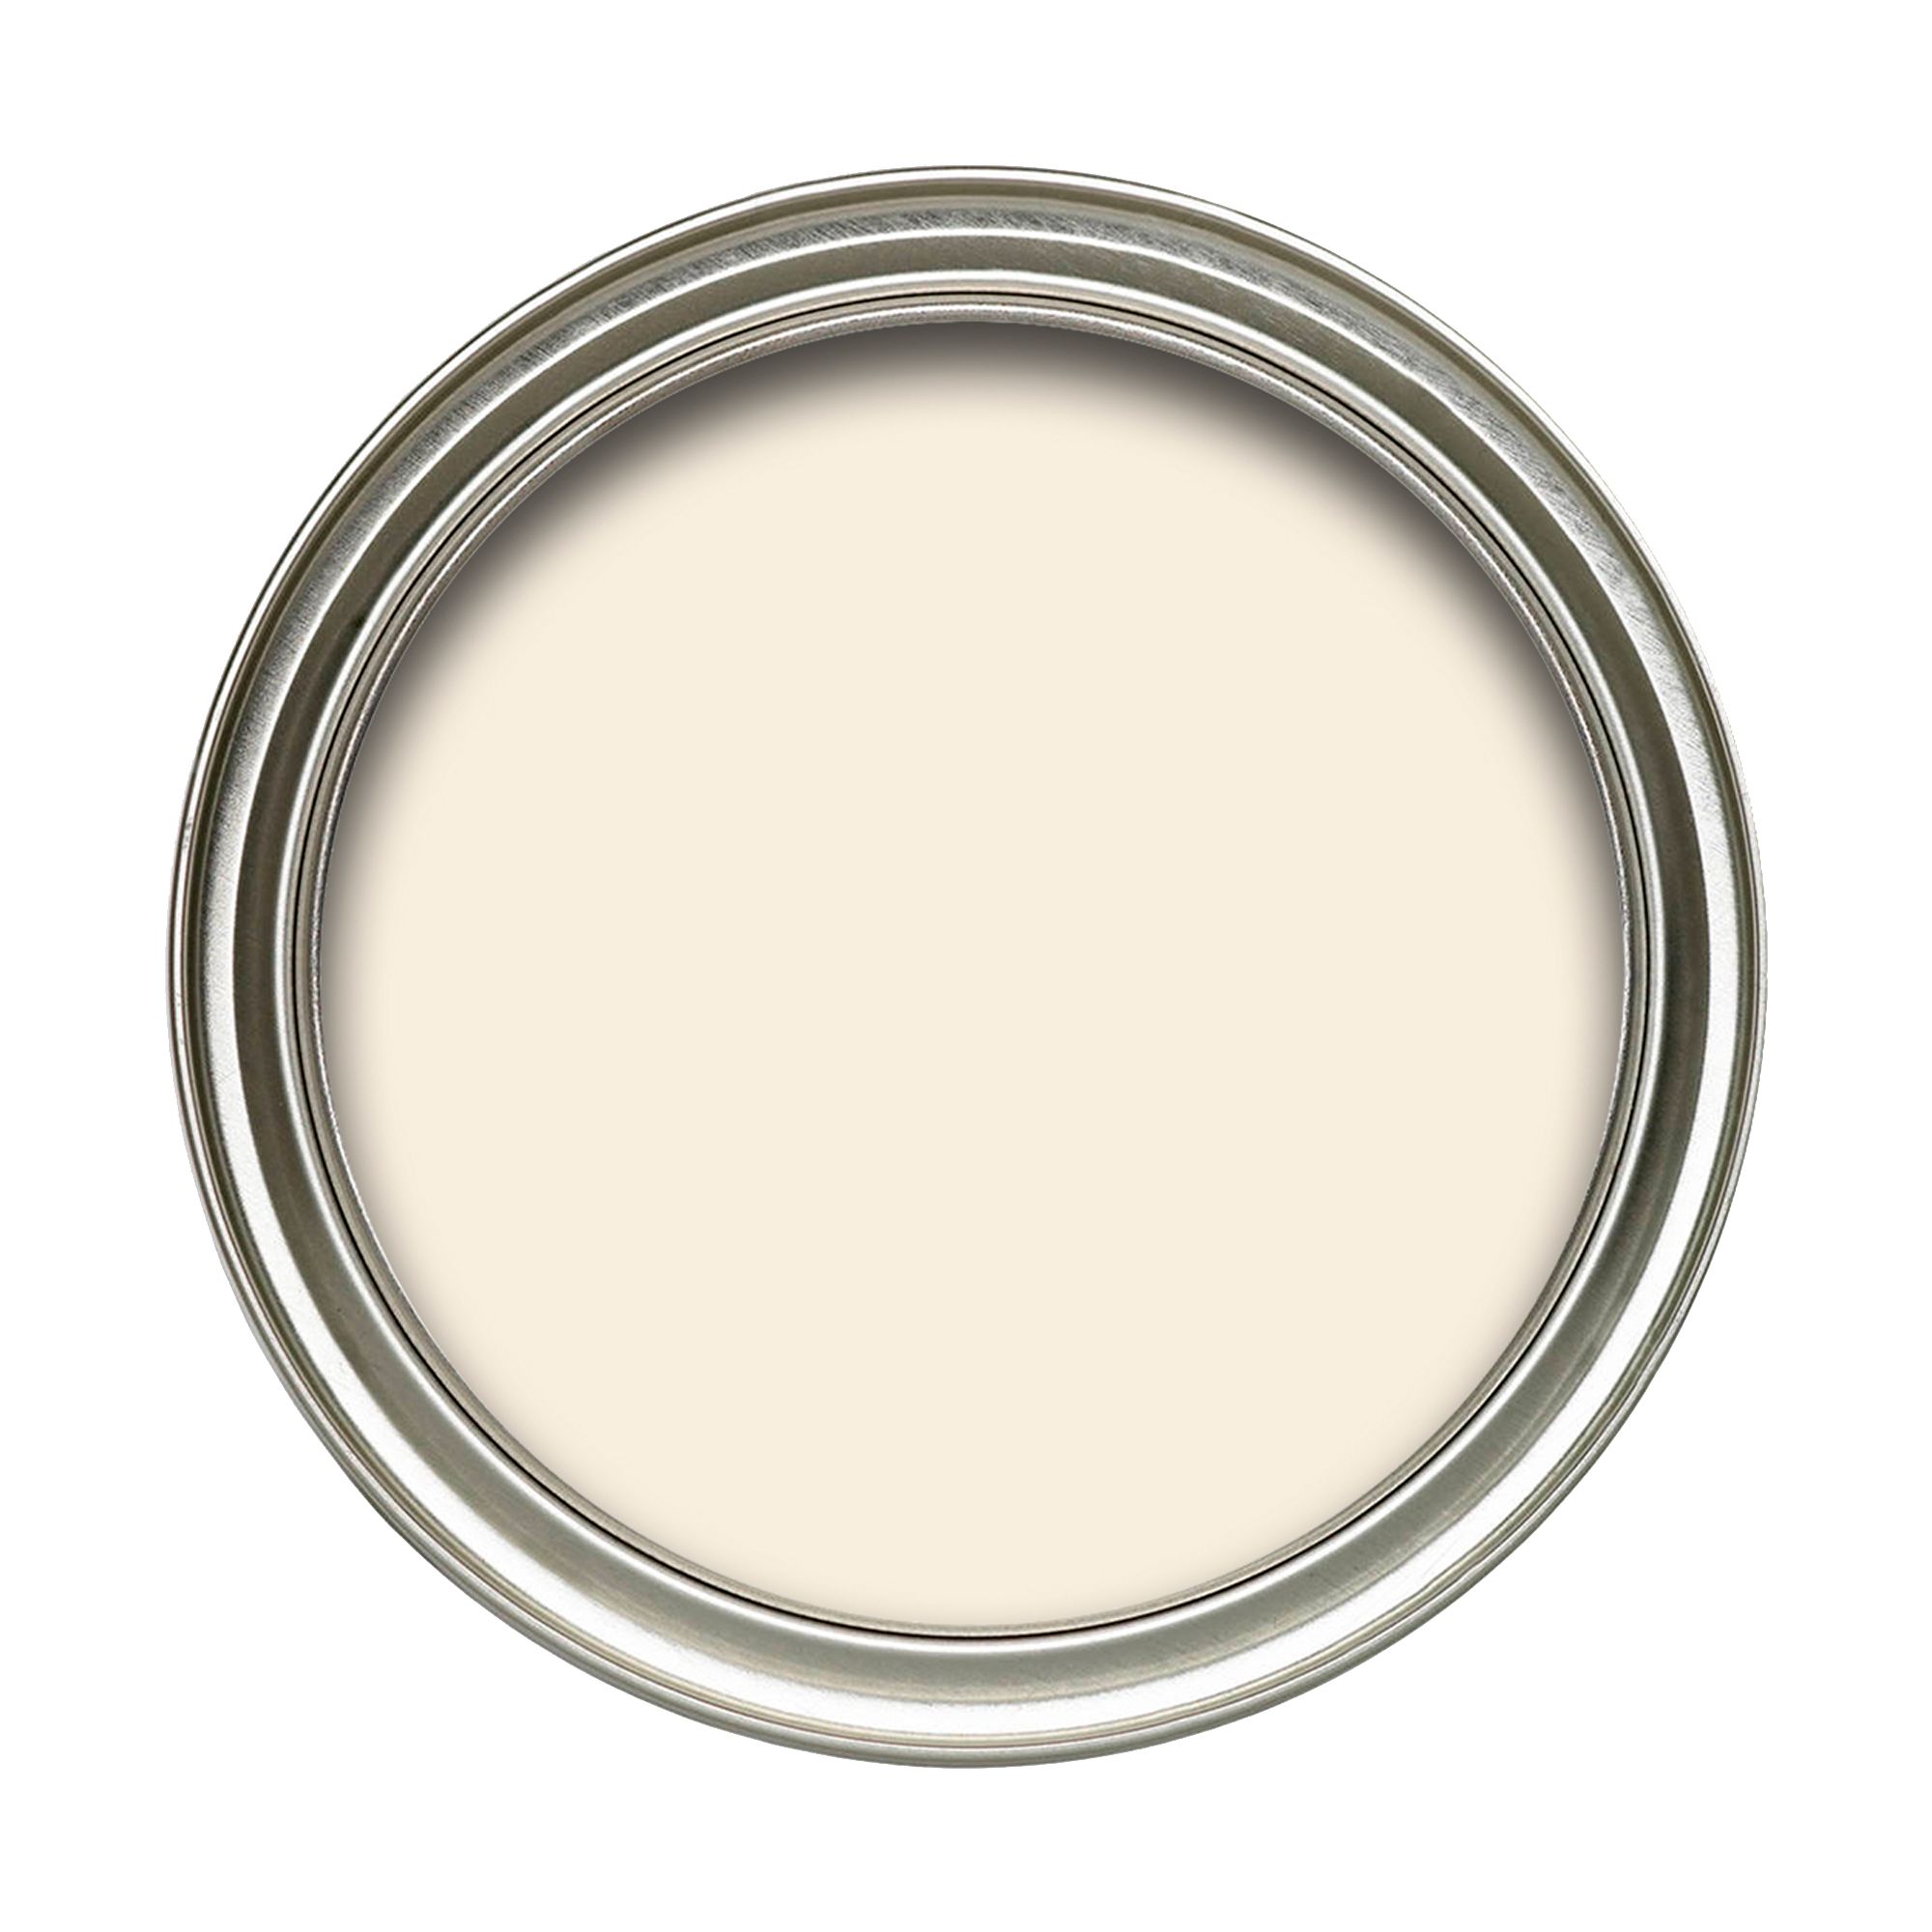 Dulux Moda Venetian white Flat matt Emulsion paint, 2.5L